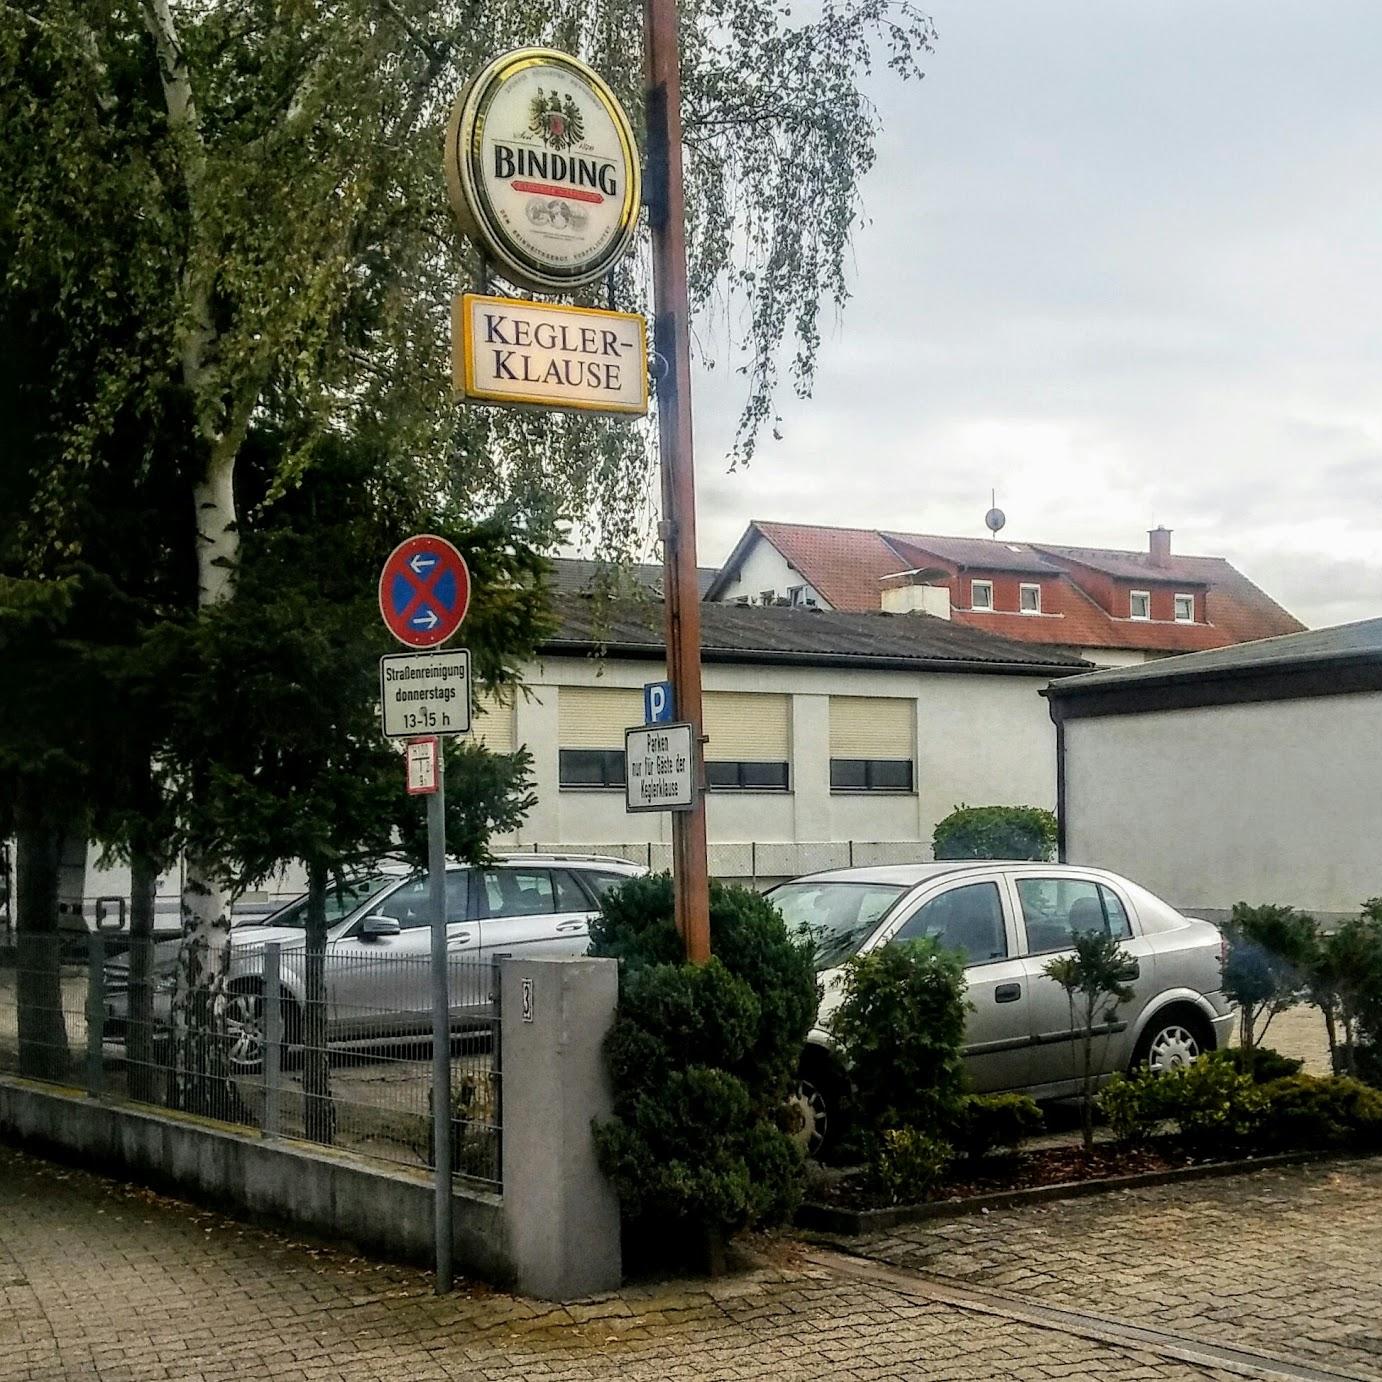 Restaurant "Keglerklause" in Mörfelden-Walldorf